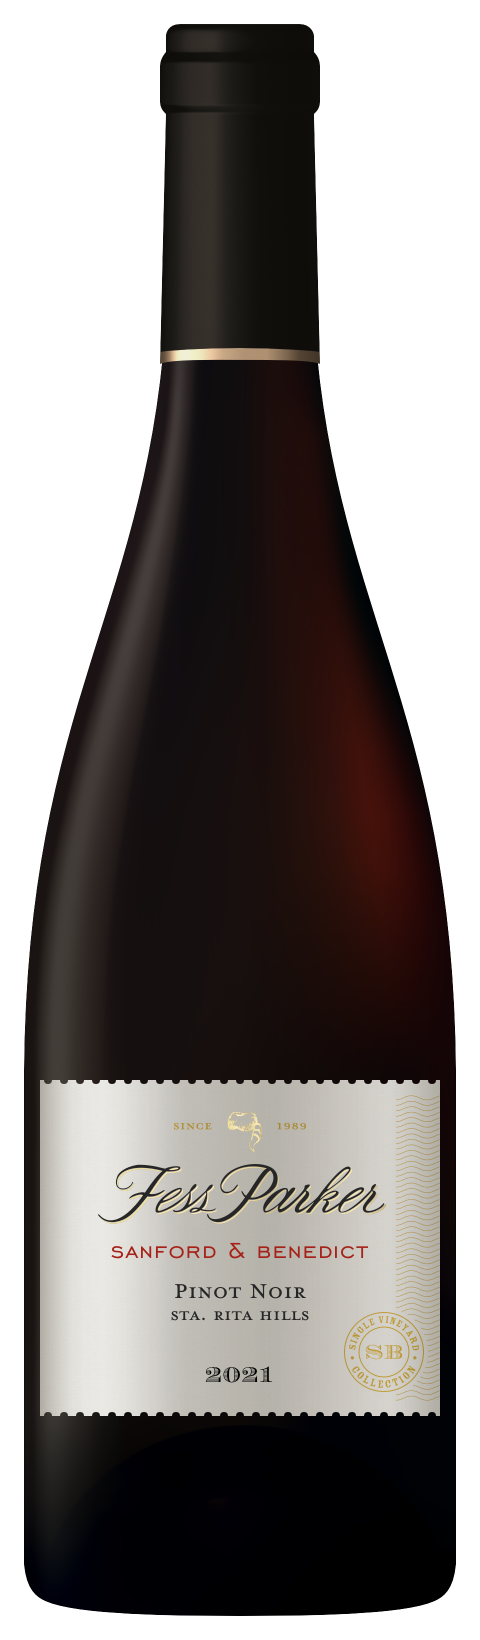 Bottle shot of Sanford & Benedict Vineyard Pinot Noir